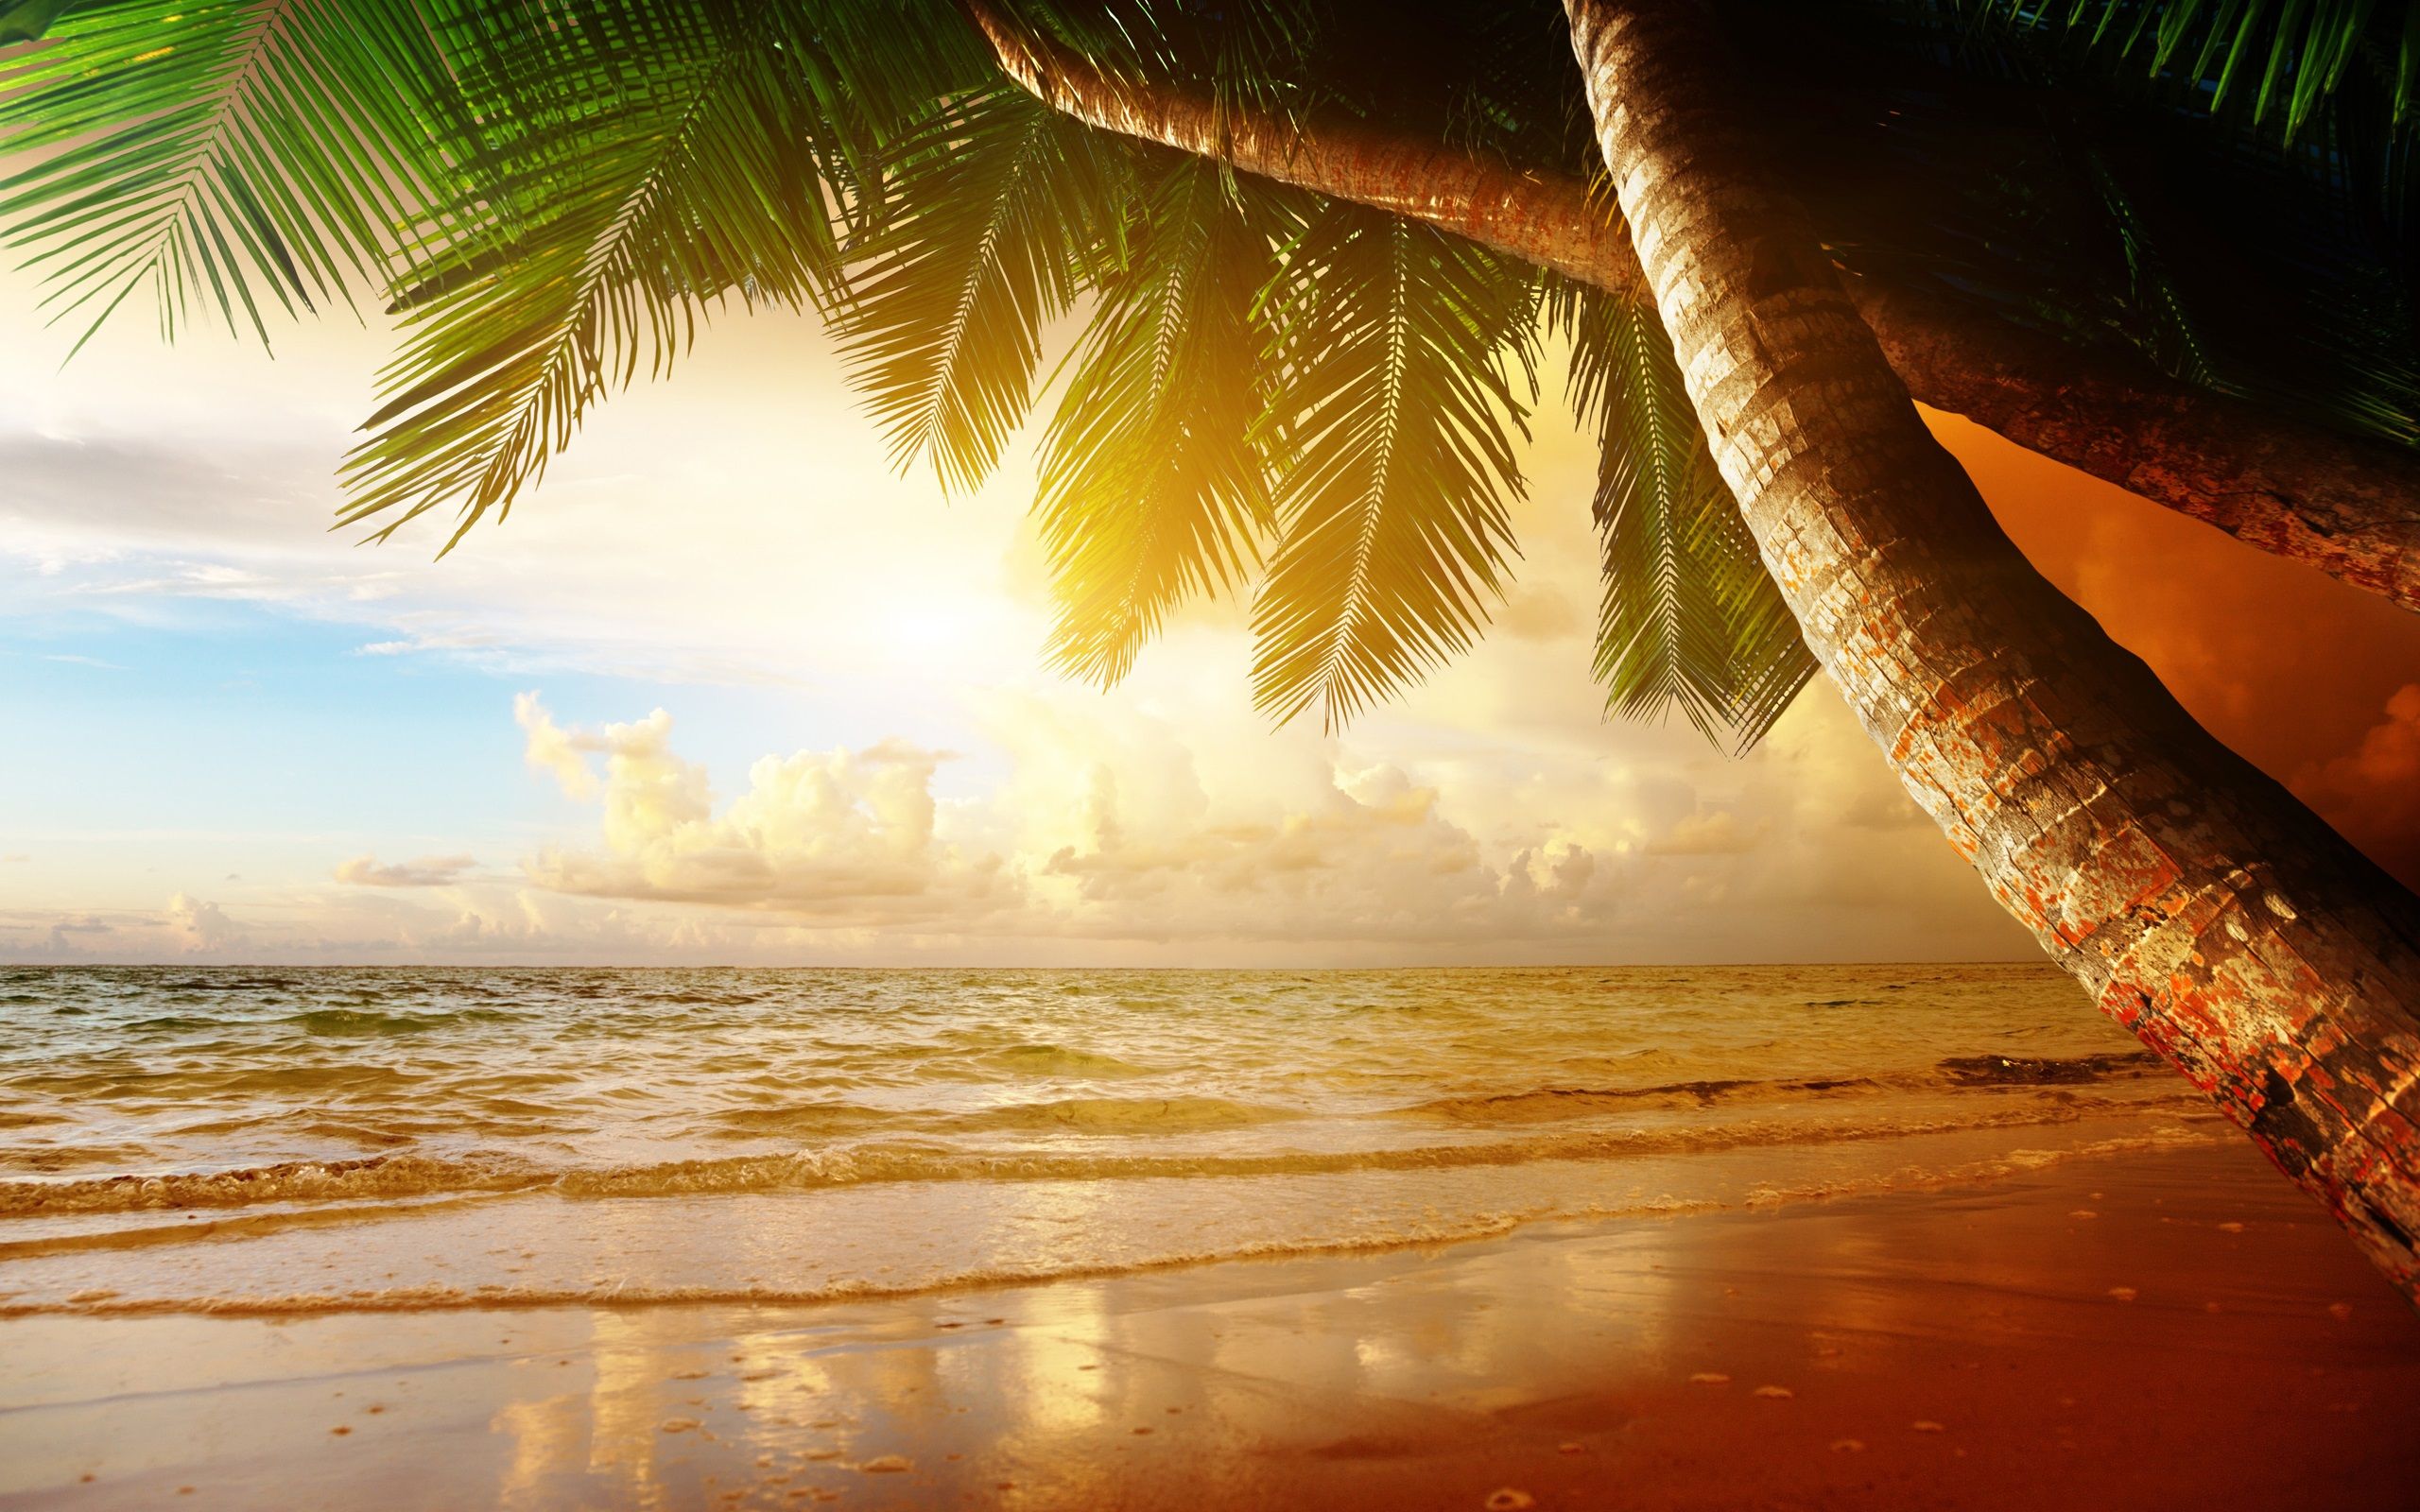  Sonnenuntergang Hintergrundbild 2560x1600. Sommer tropische Landschaft, Sonnenuntergang, Meer, Ozean, Palmen, Sonnenuntergang 2560x1600 HD Hintergrundbilder, HD, Bild